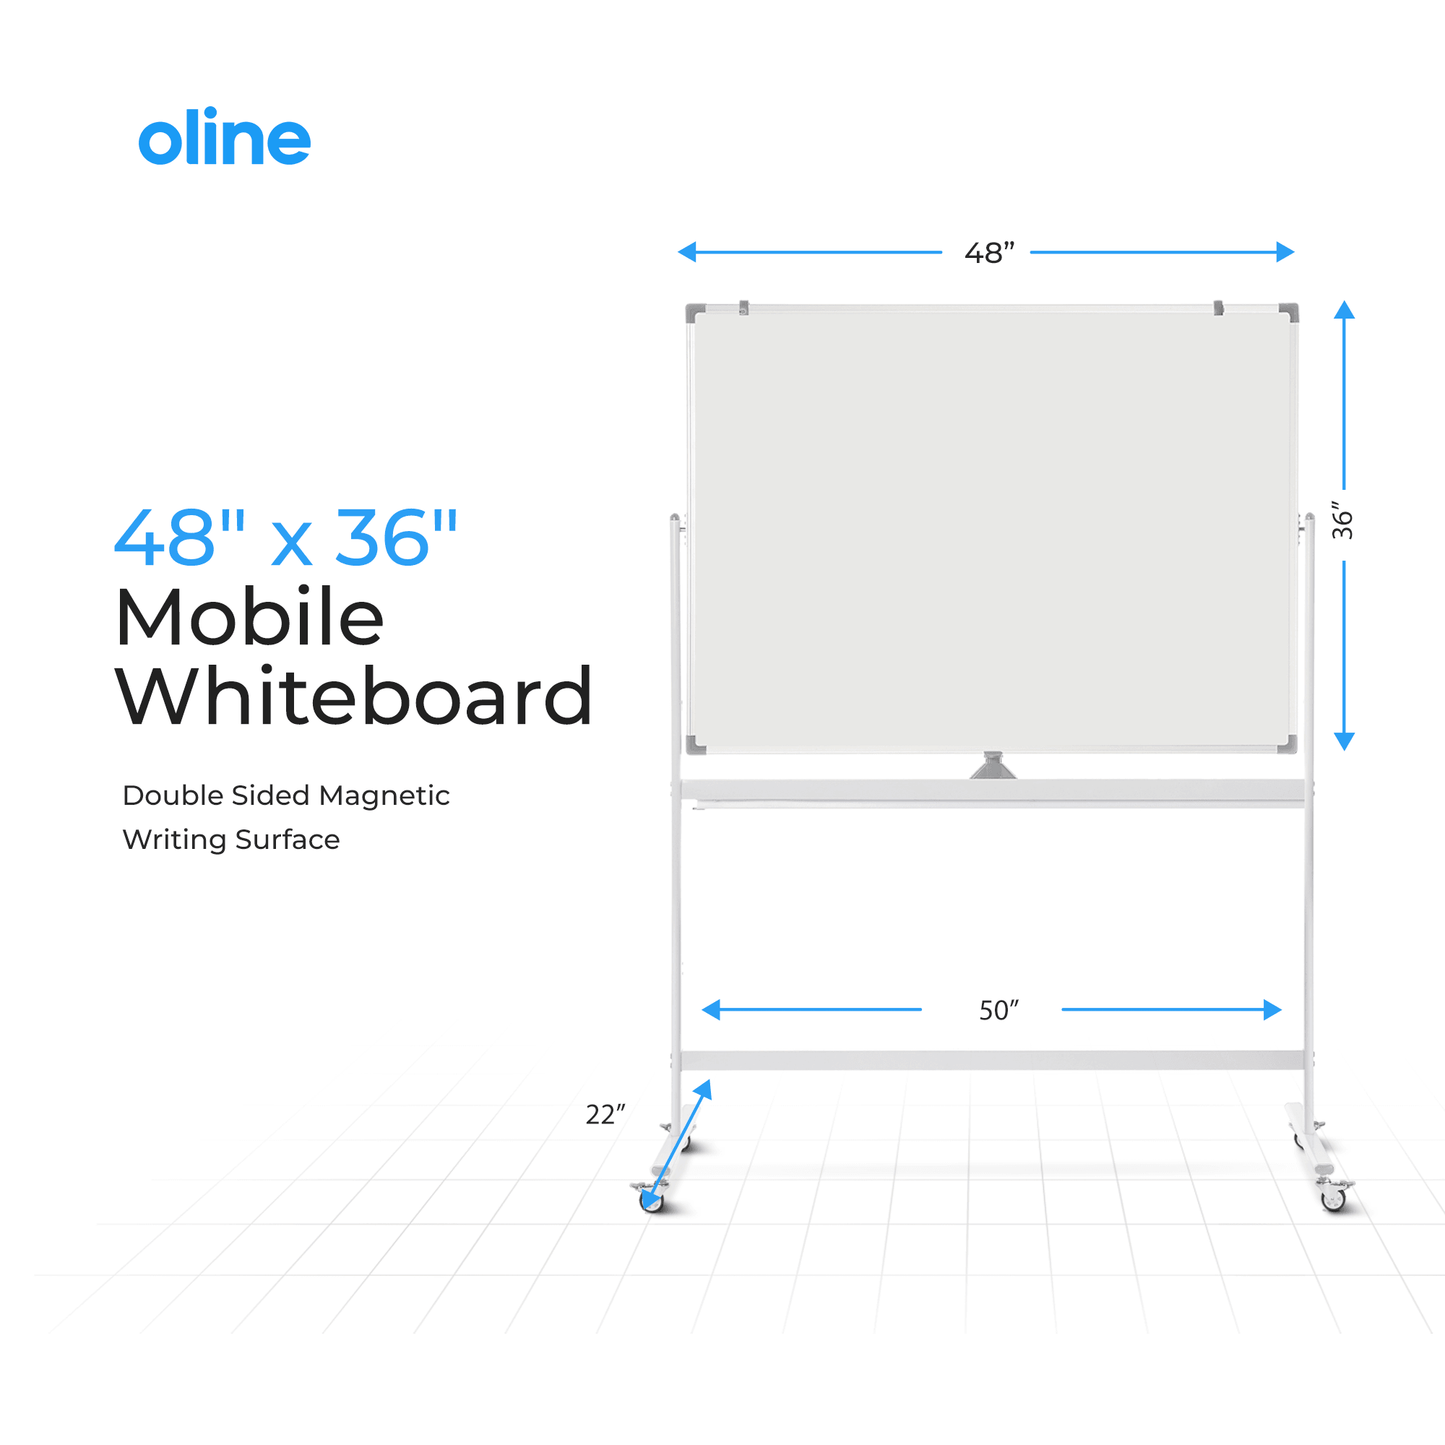 Mobile Whiteboard - 48"x36" - Oline